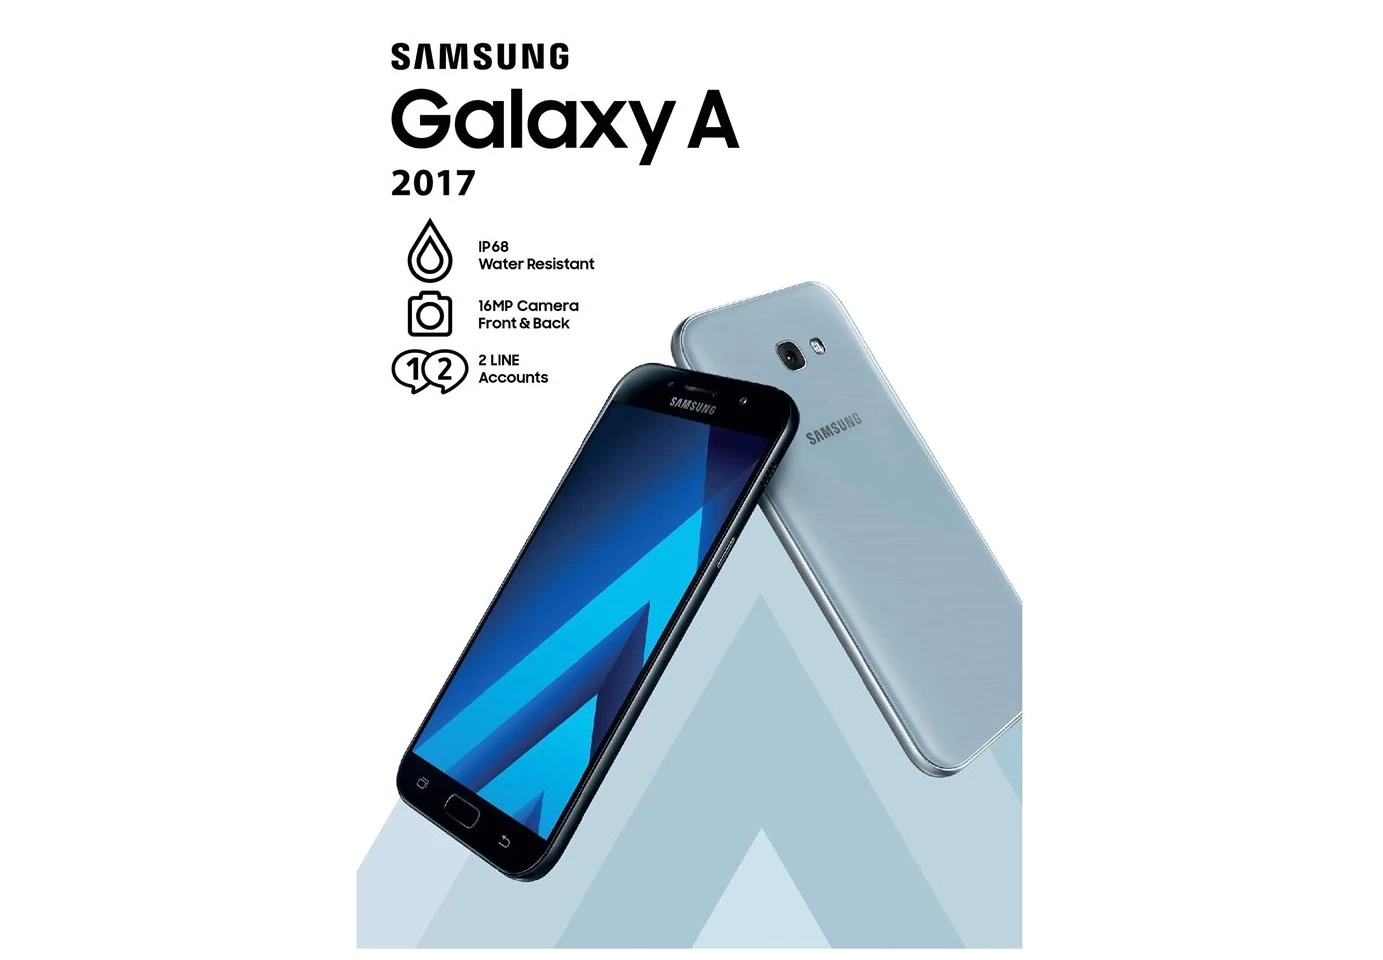 15874854 10155084673212590 3442103585565104620 o 1 | galaxy a 2017 | รายละเอียดชัดๆ โปรแรงของ Samsung Galaxy A 2017 กับของแถมมูลค่า 6,000 บาท